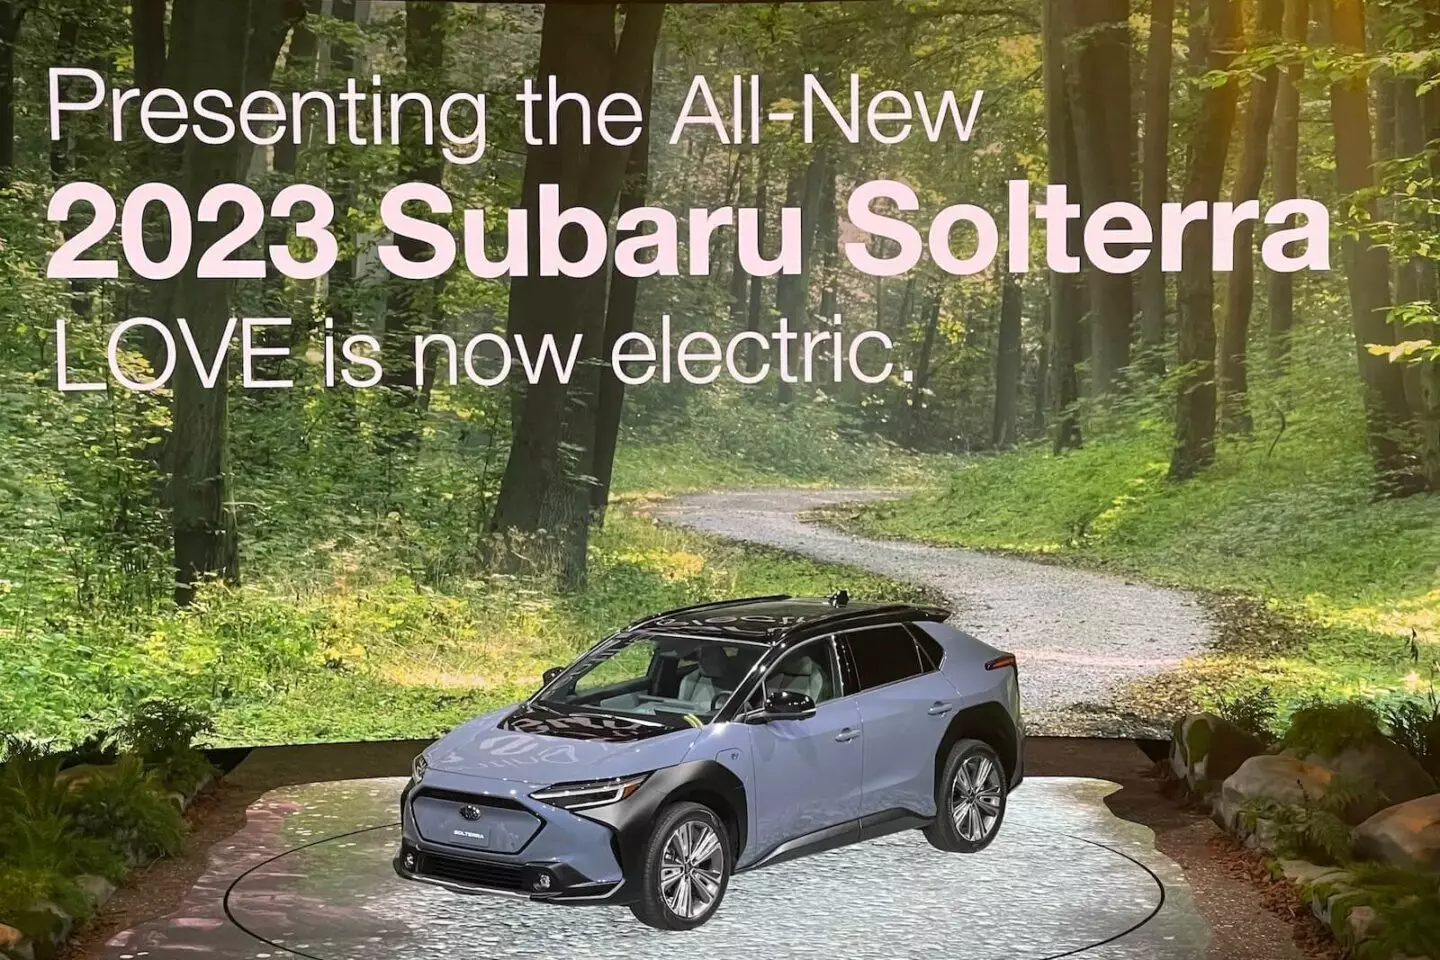 Subaru Soltera